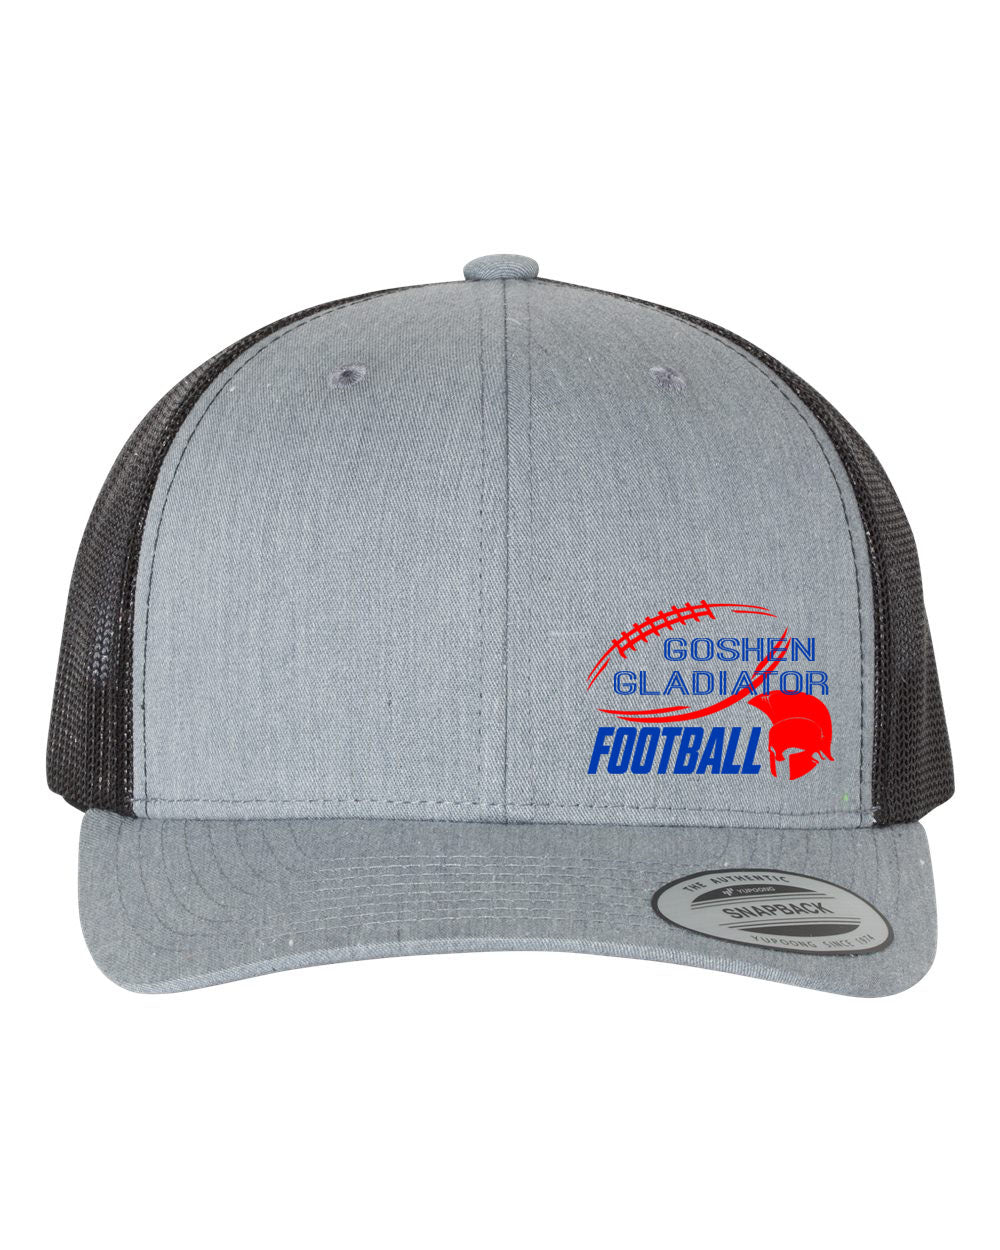 Goshen Football design 6 Trucker Hat